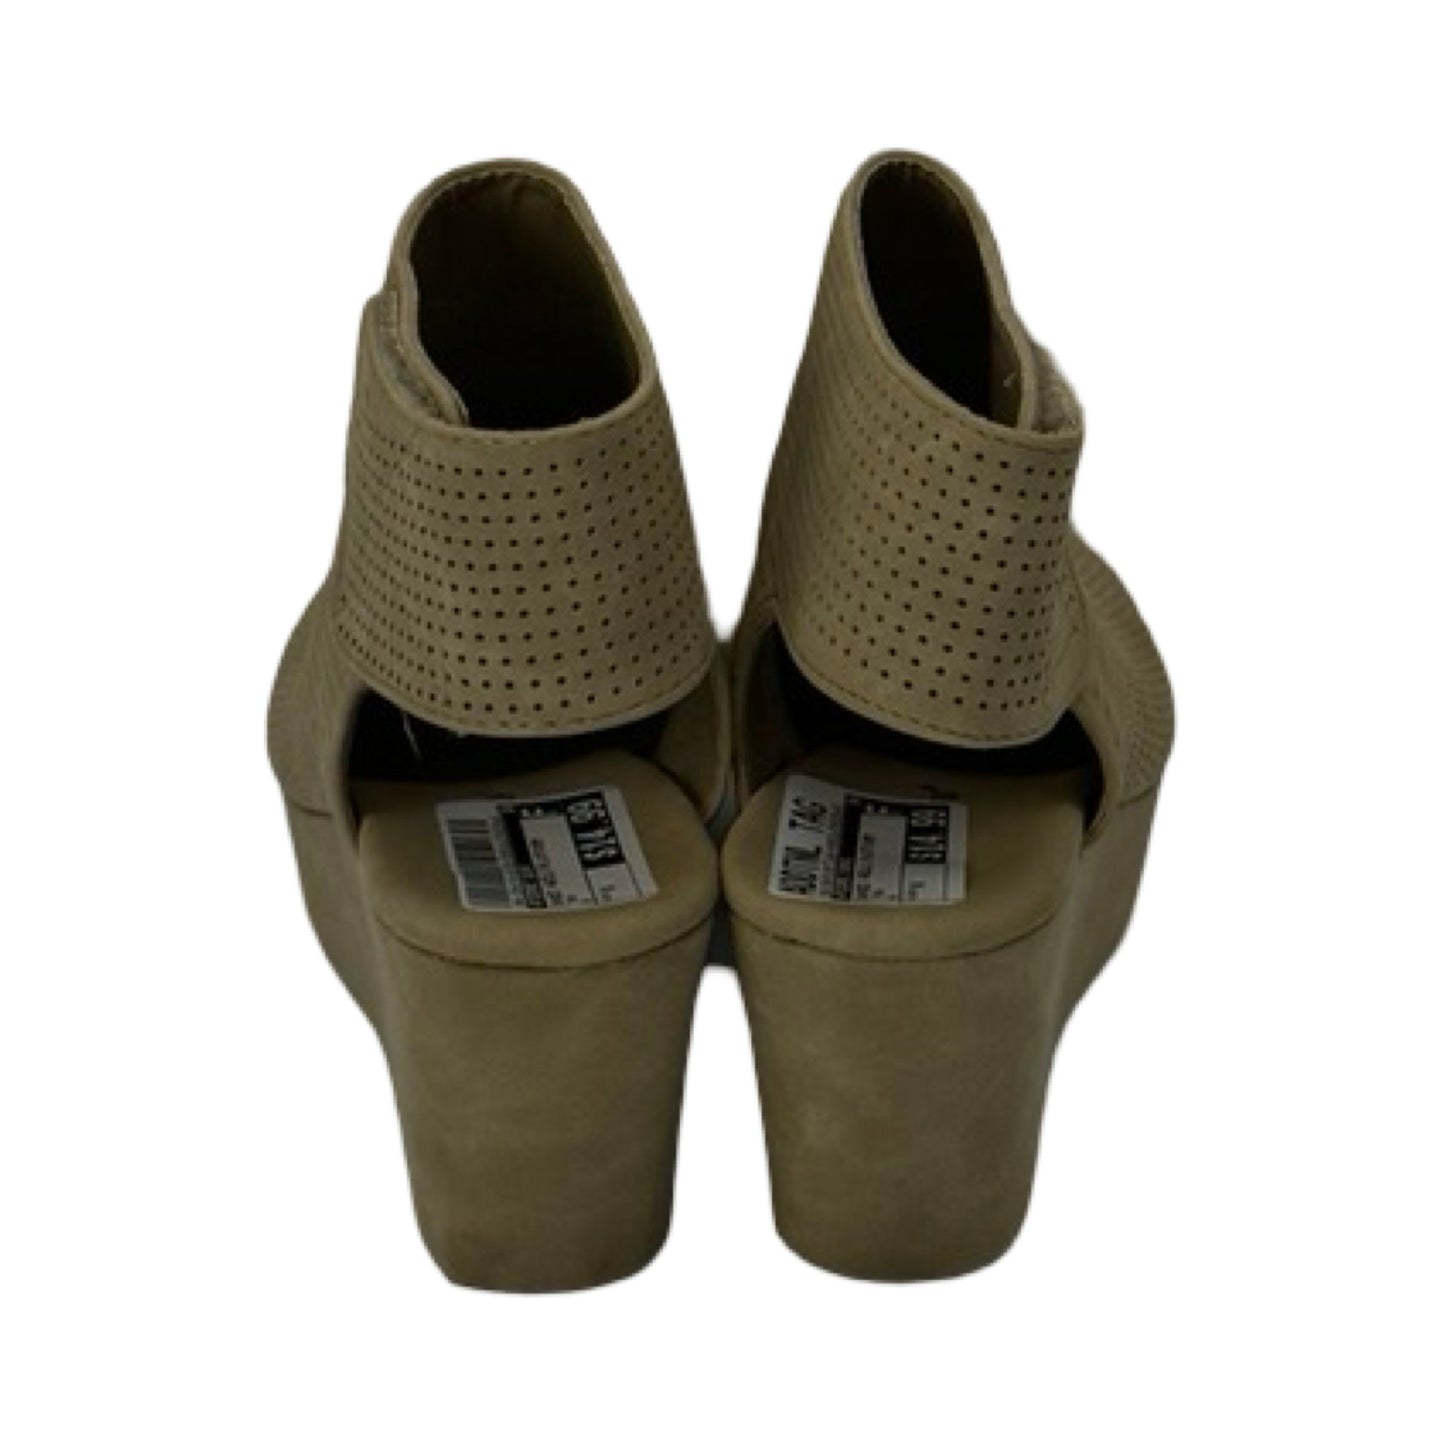 Tan Shoes Heels Platform Pierre Dumas, Size 8